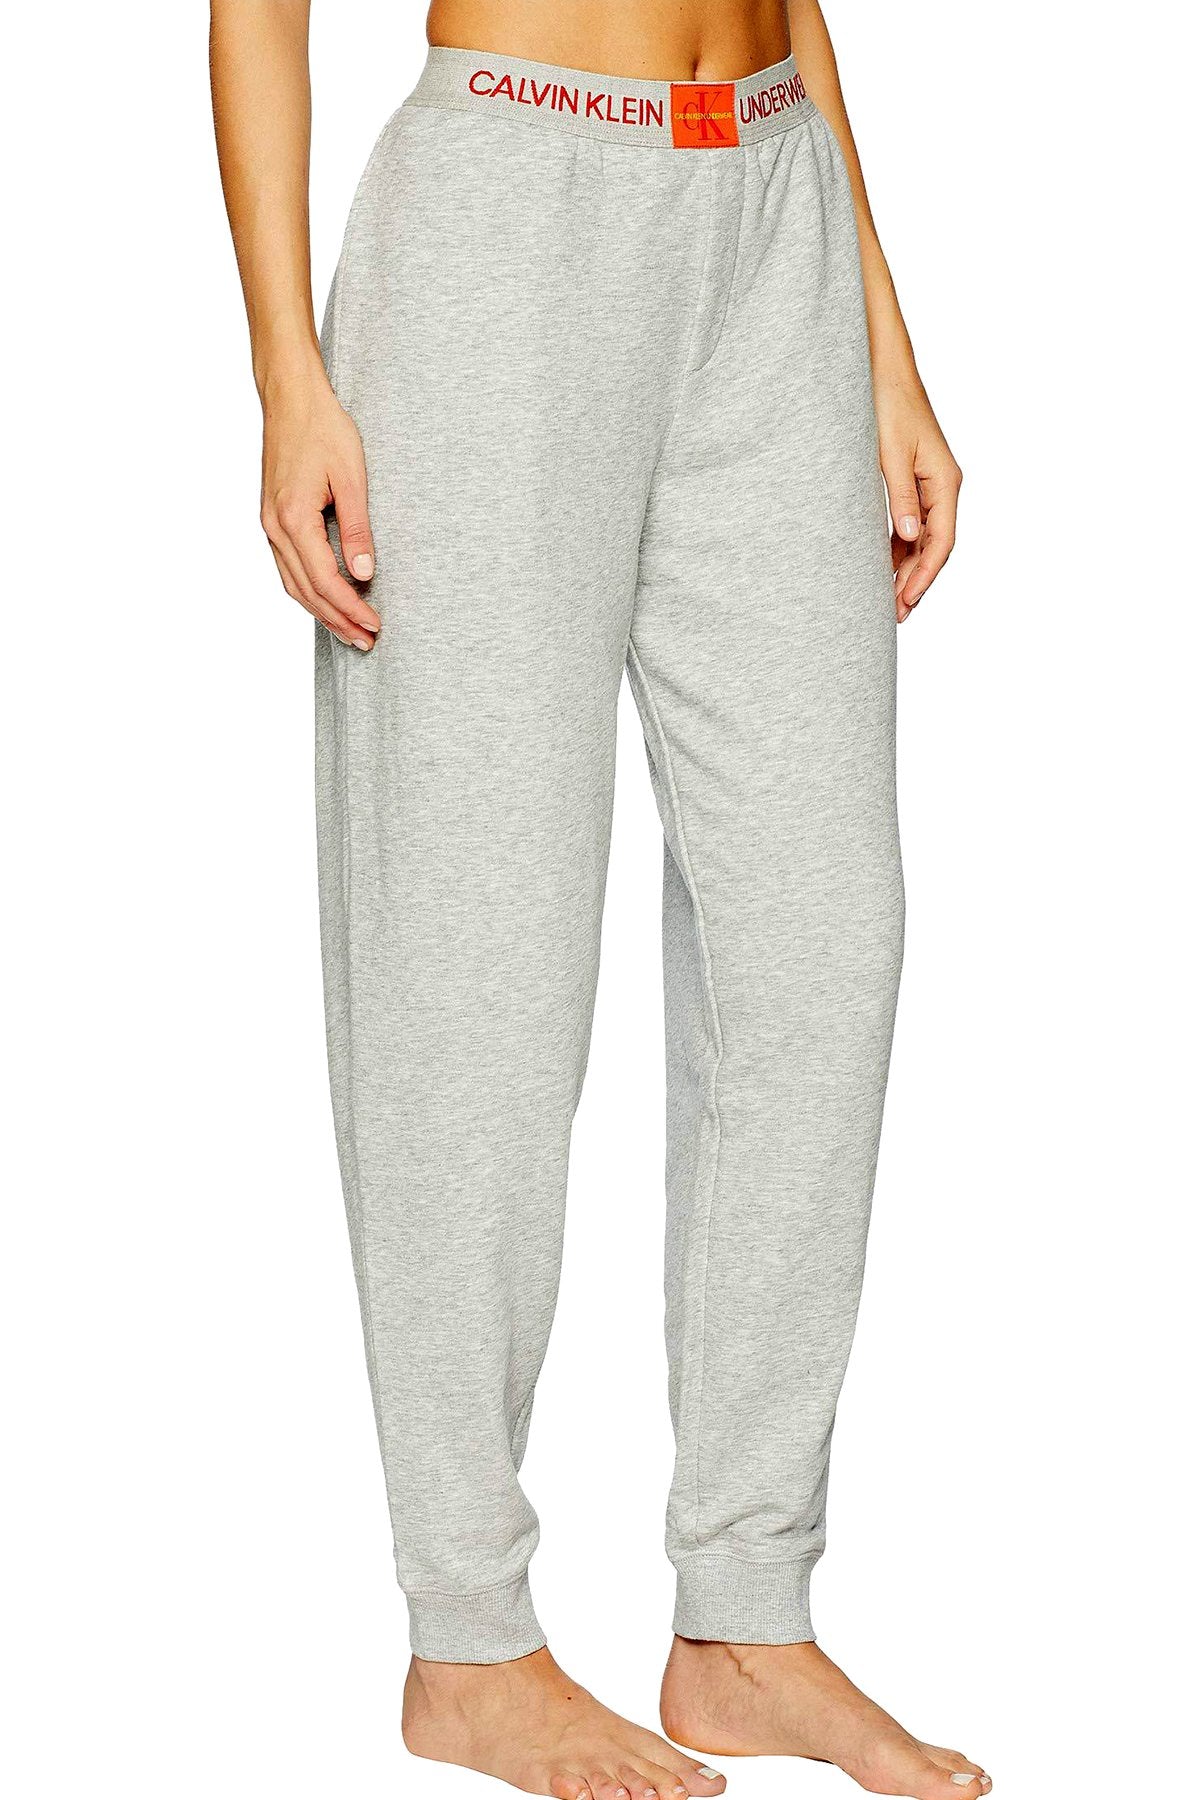 Top-Verkäufer Calvin Klein Monogram Pant Lounge Grey in – Jogger Heather CheapUndies